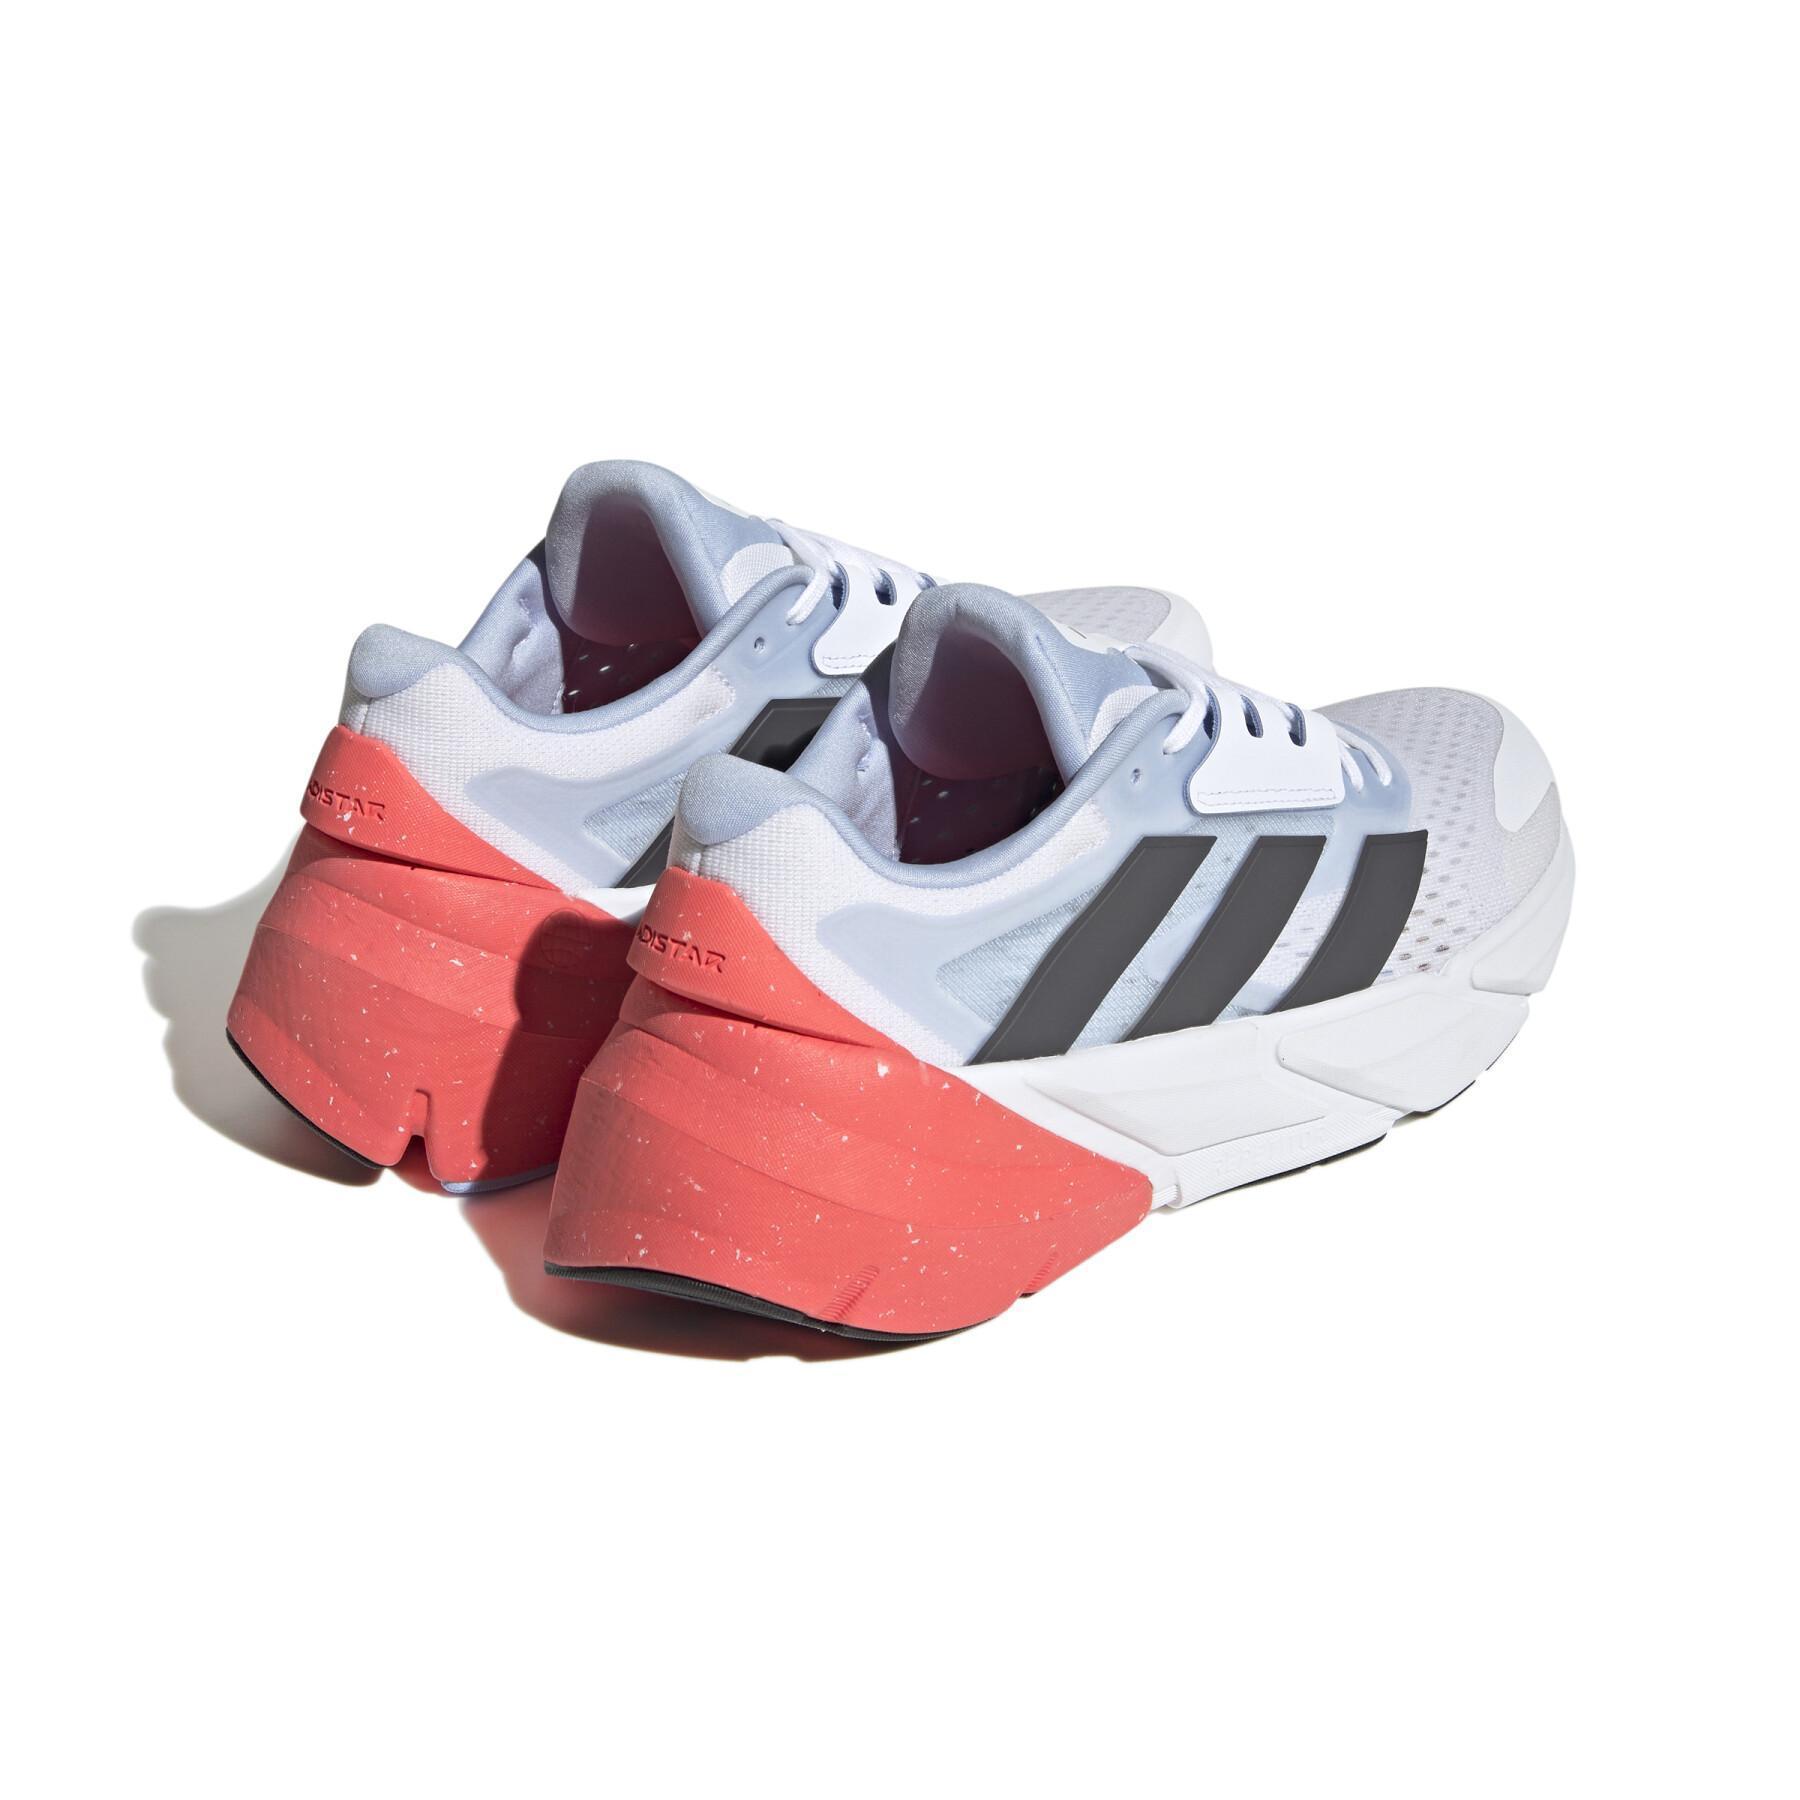 Schoen van Running adidas Adistar 2.0